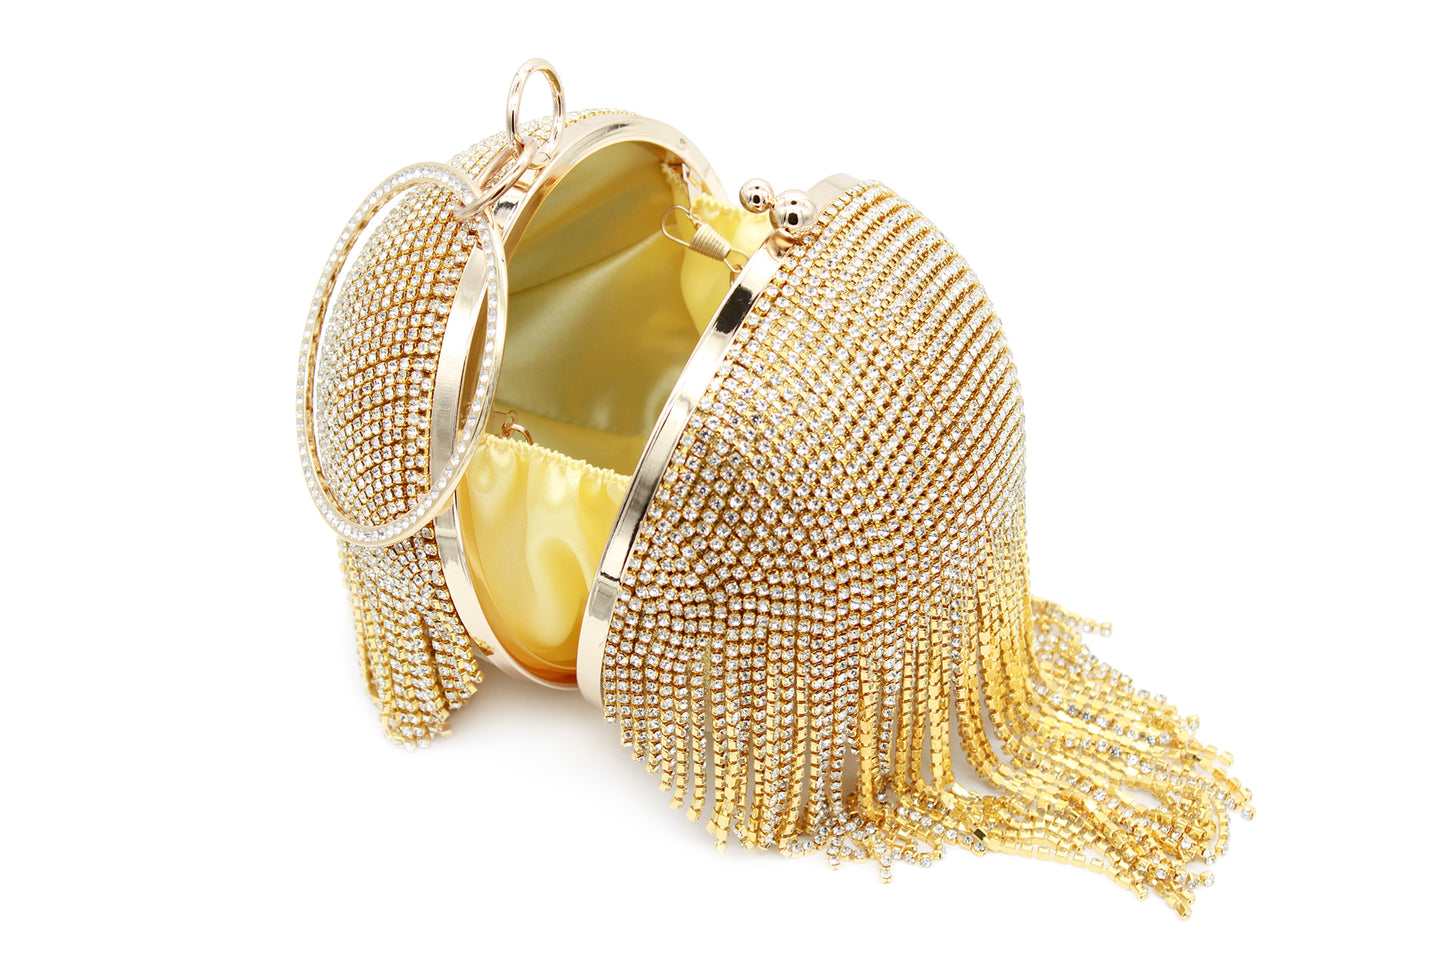 Bling Crystal Luxury Ball-Shaped Golden Handbag